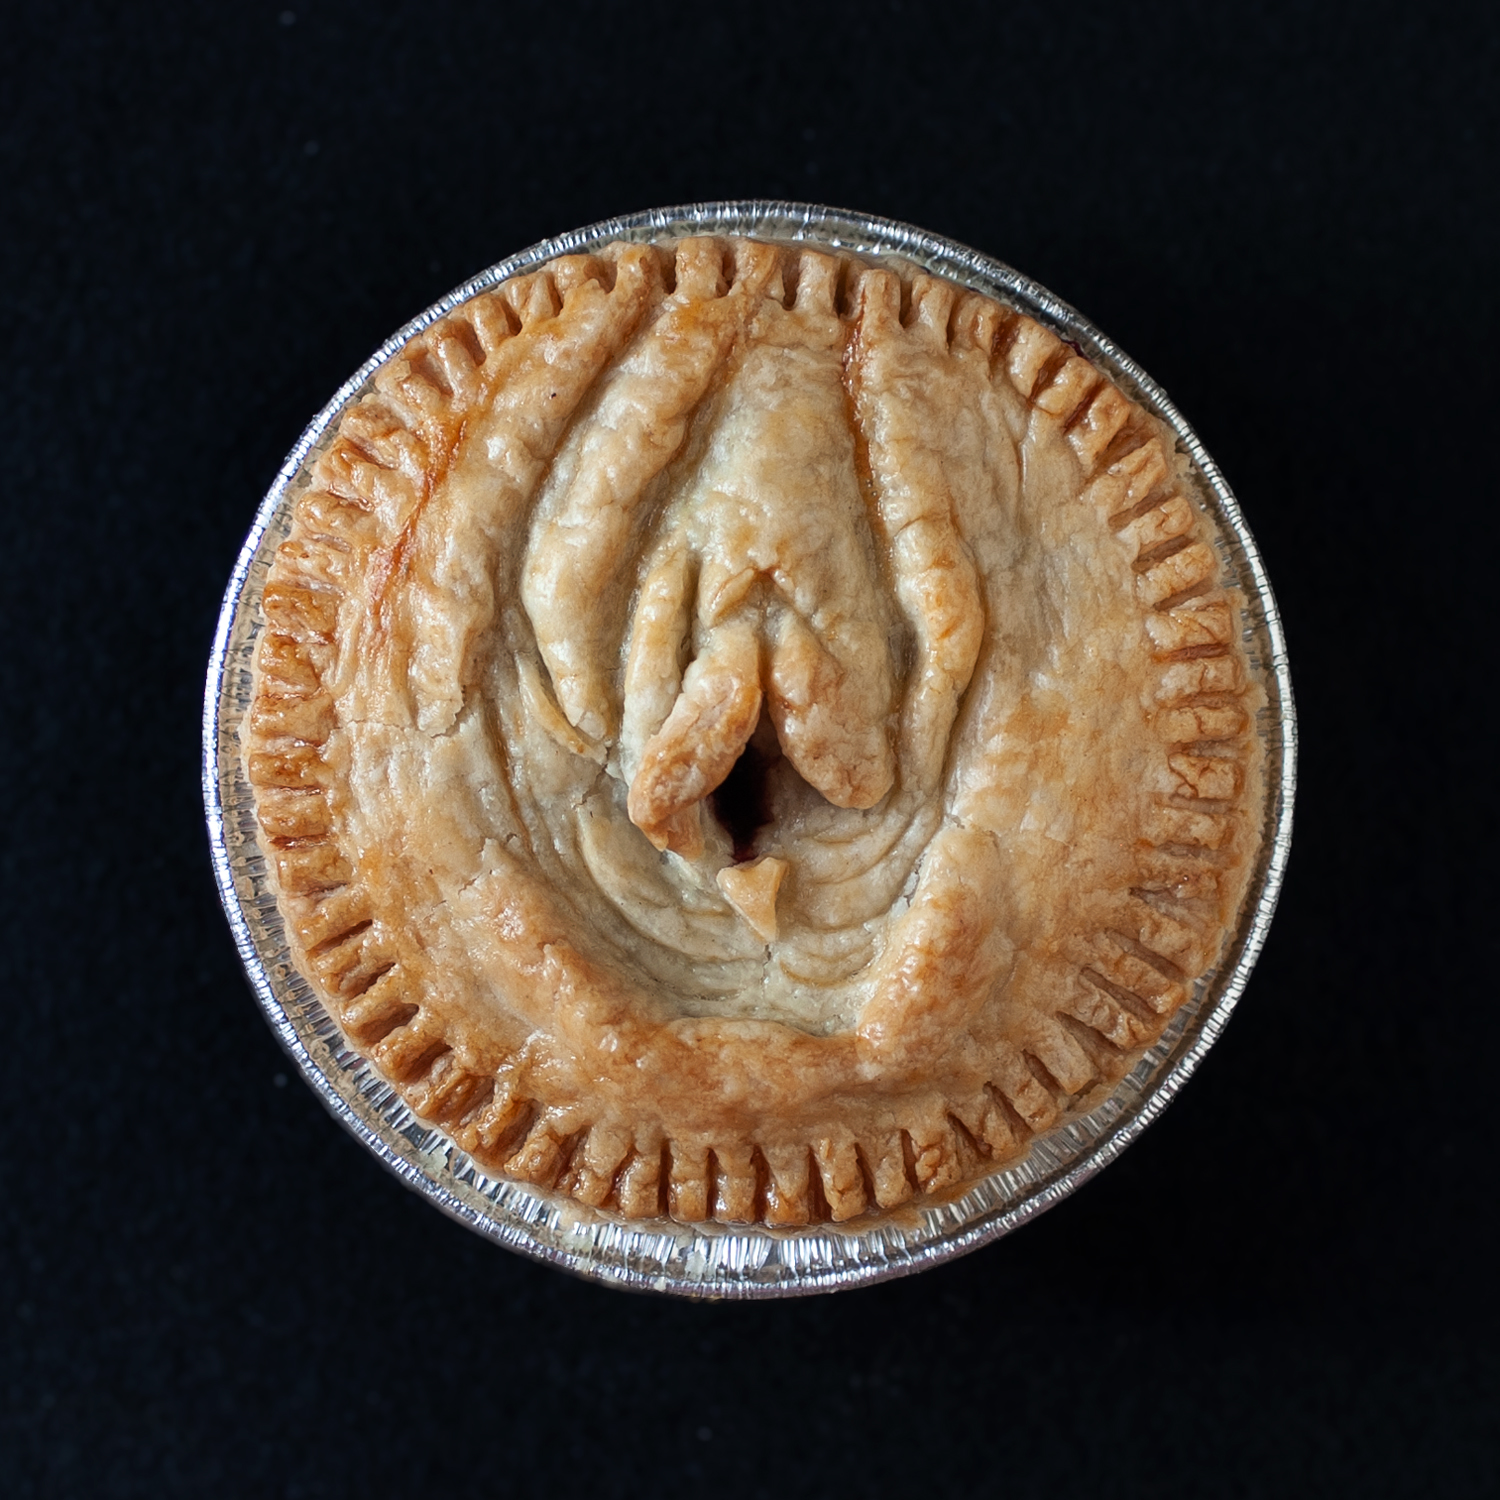 baked pie with vulva pie crust art on a black background